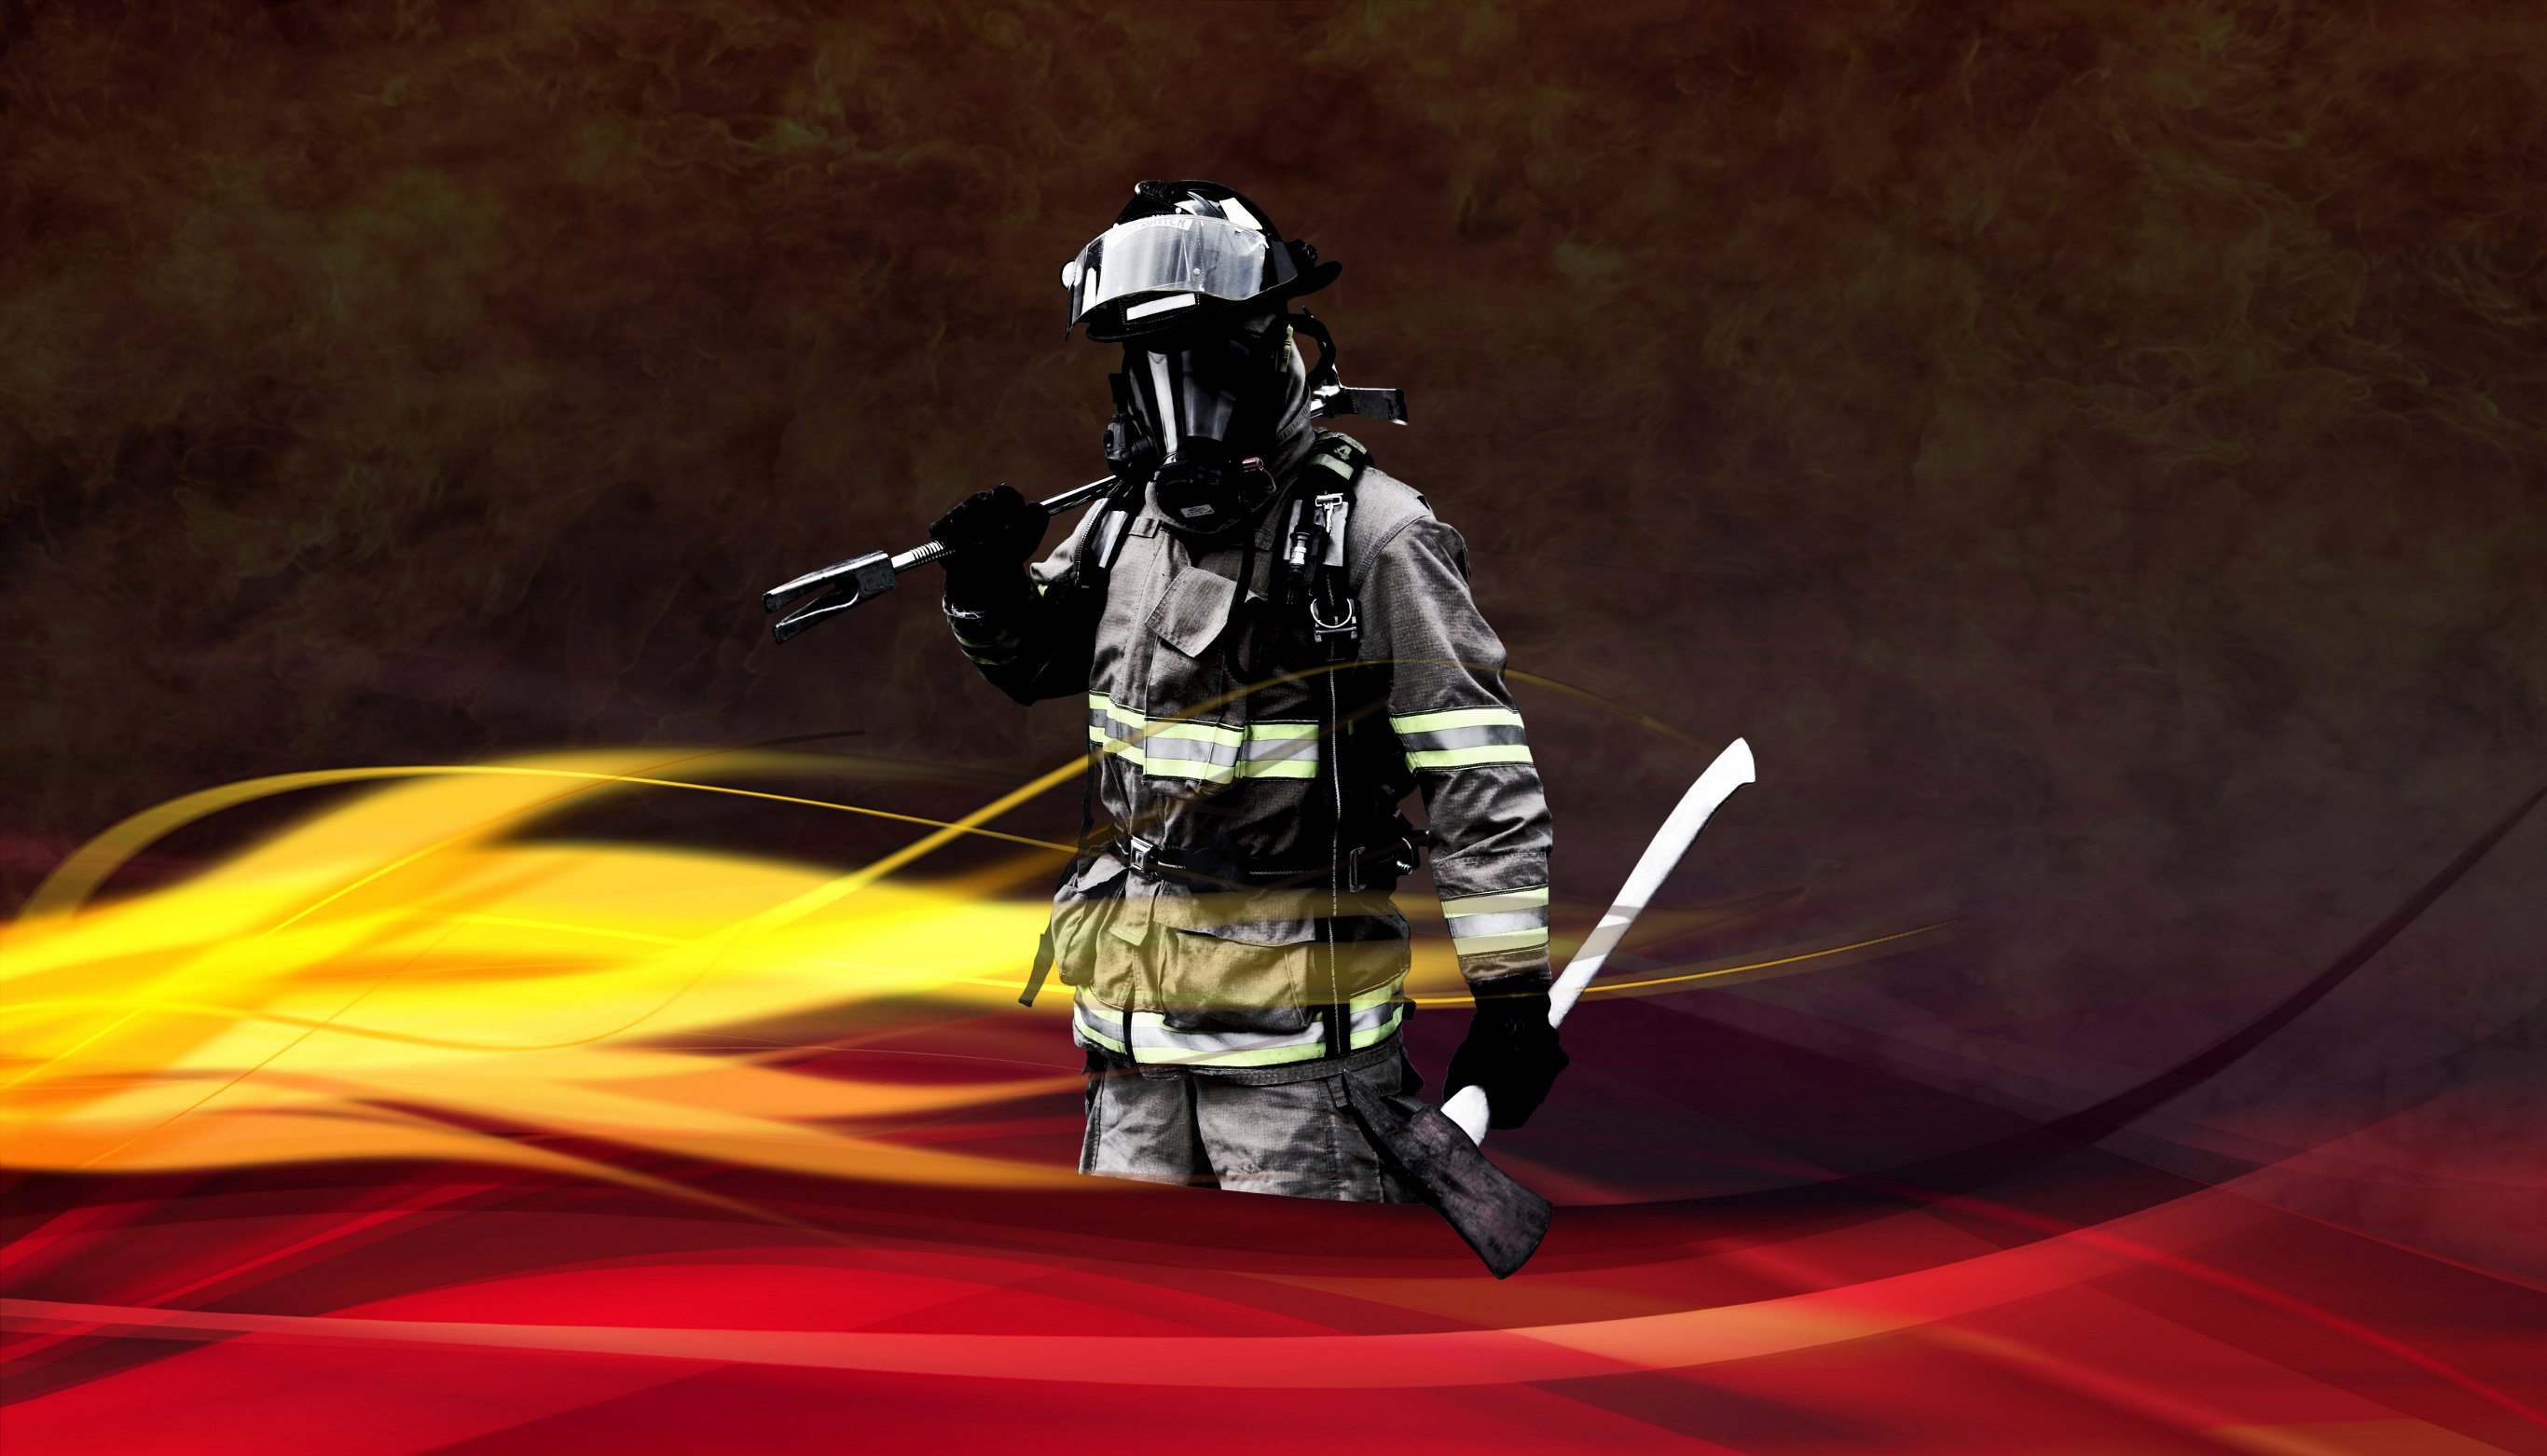 Firefighter wallpaper by BigNate267  Download on ZEDGE  ec2d